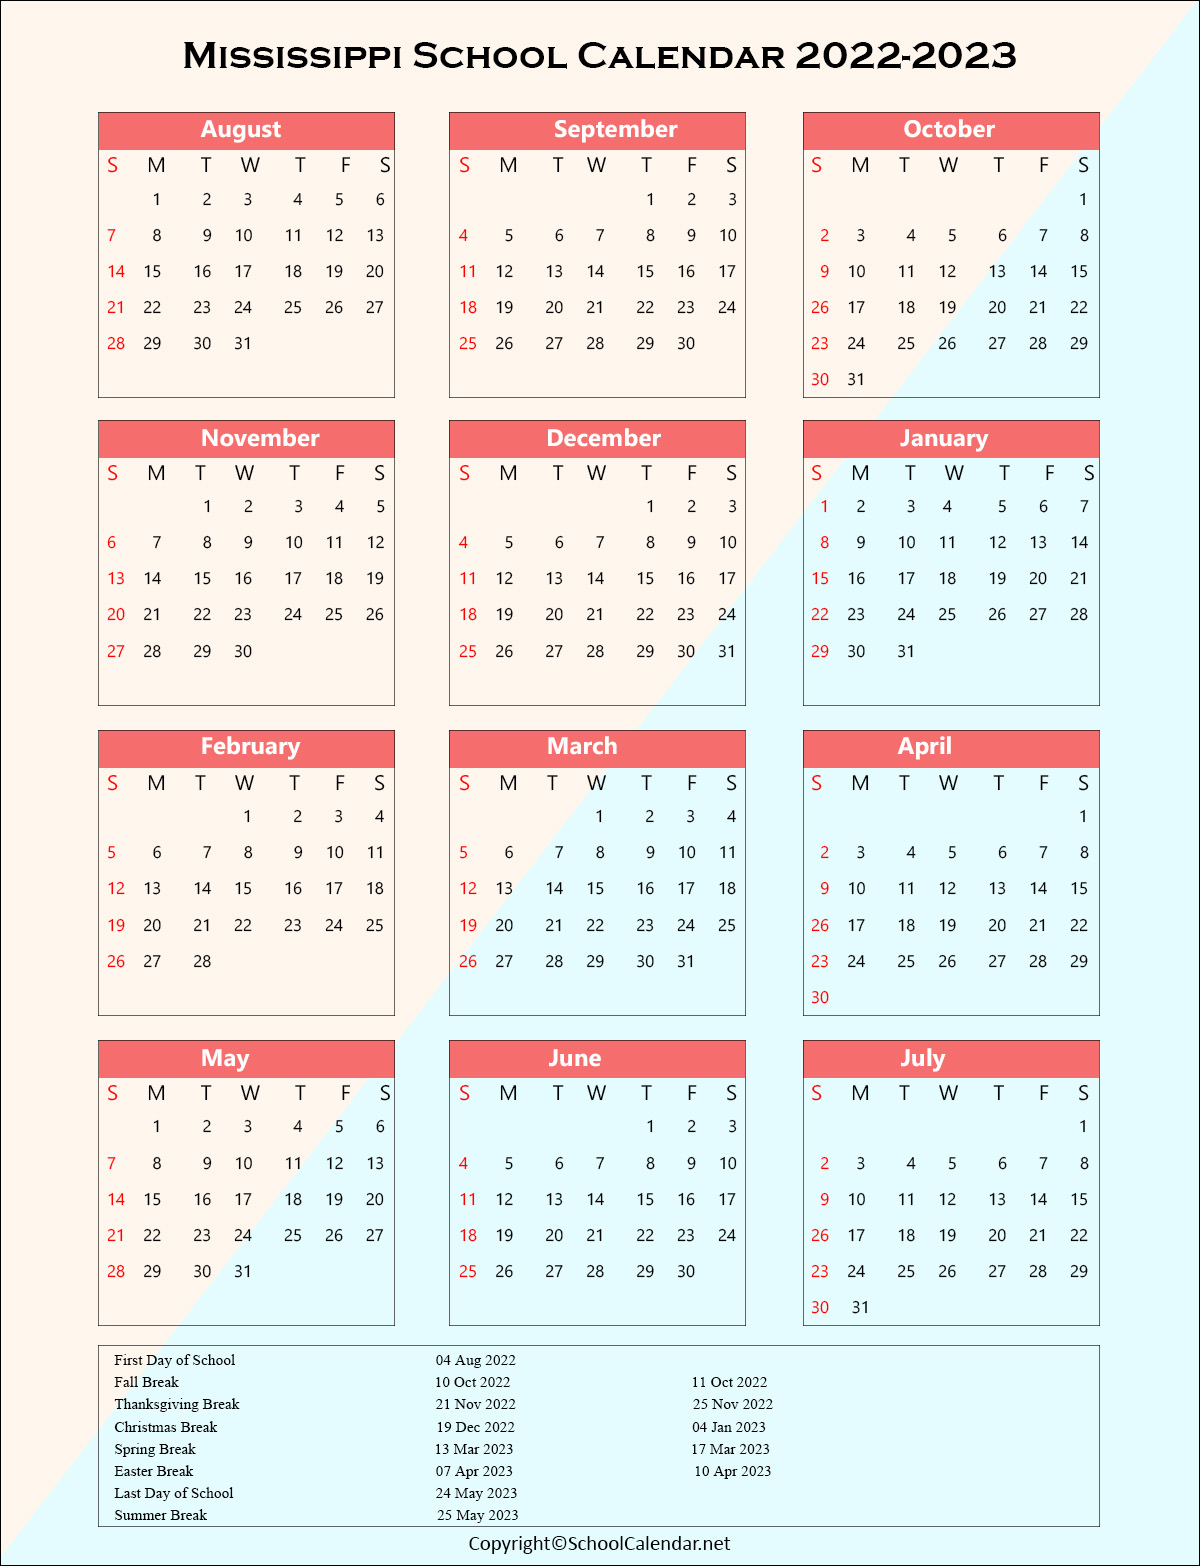 Mississippi School Holiday Calendar 2022